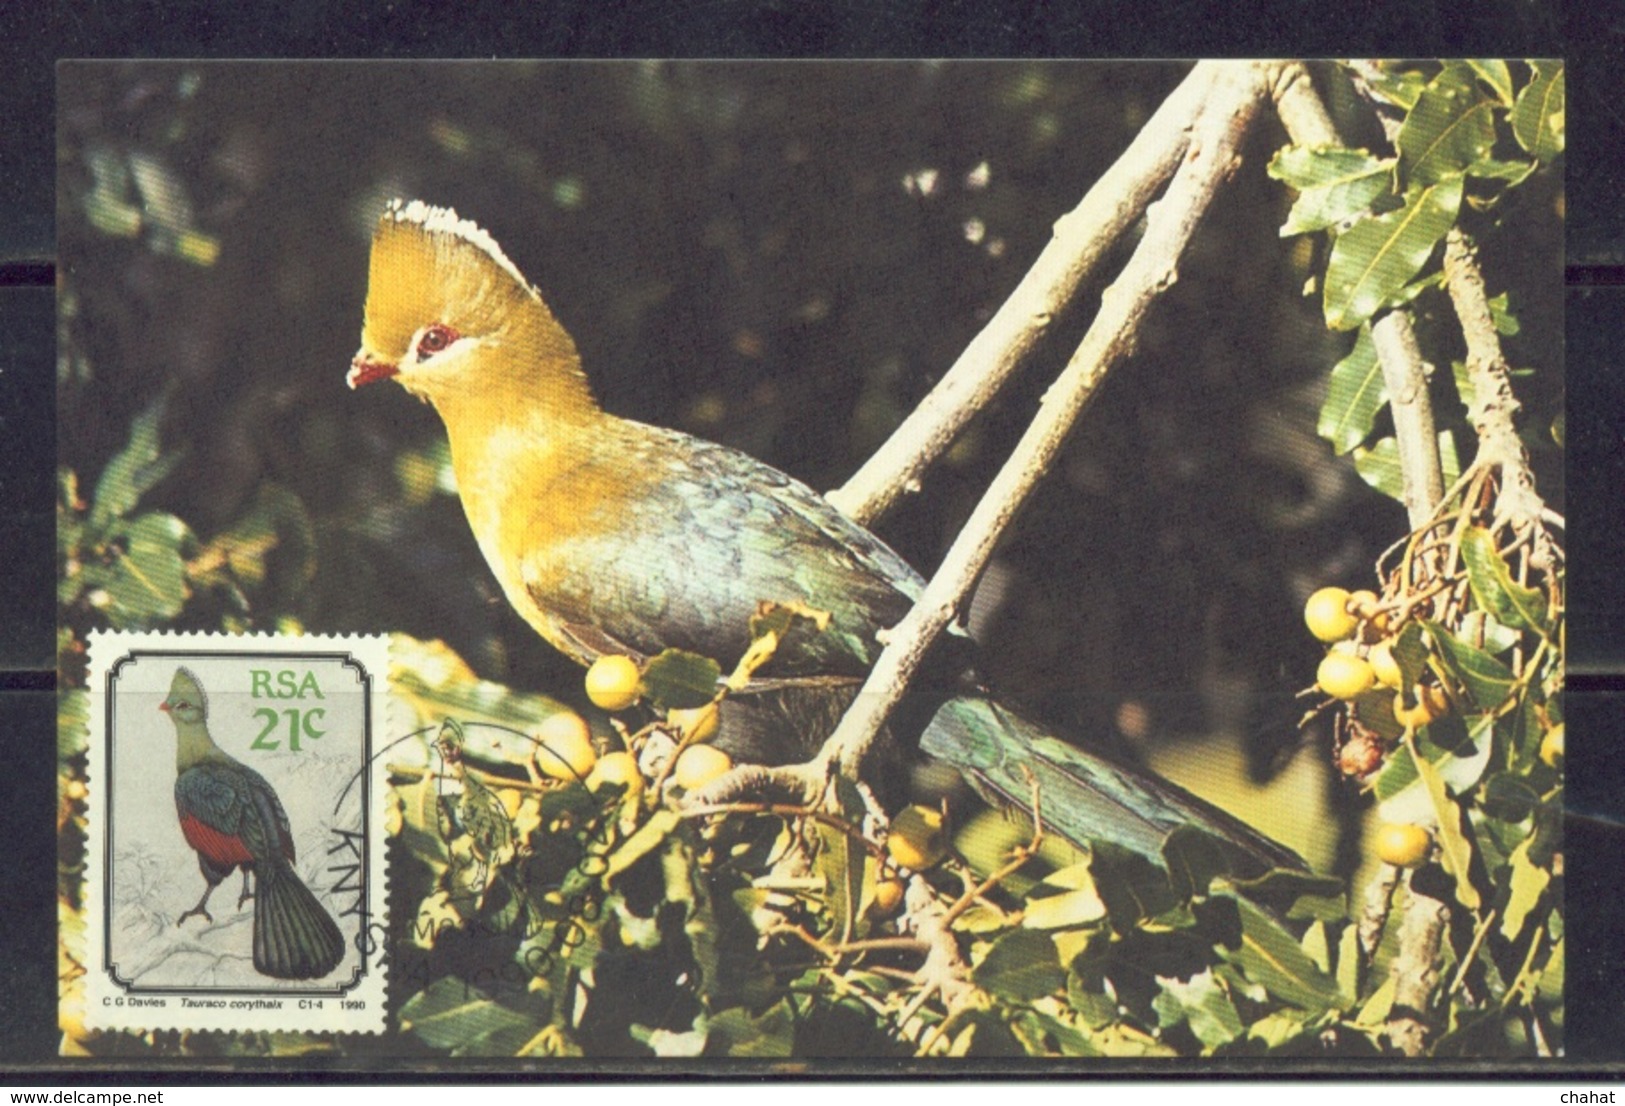 BIRDS-KNYSNA TURACO-MAXIMUM CARD-SOUTH AFRICA-1990-SCARCE-MNH-MC-49 - Cuco, Cuclillos